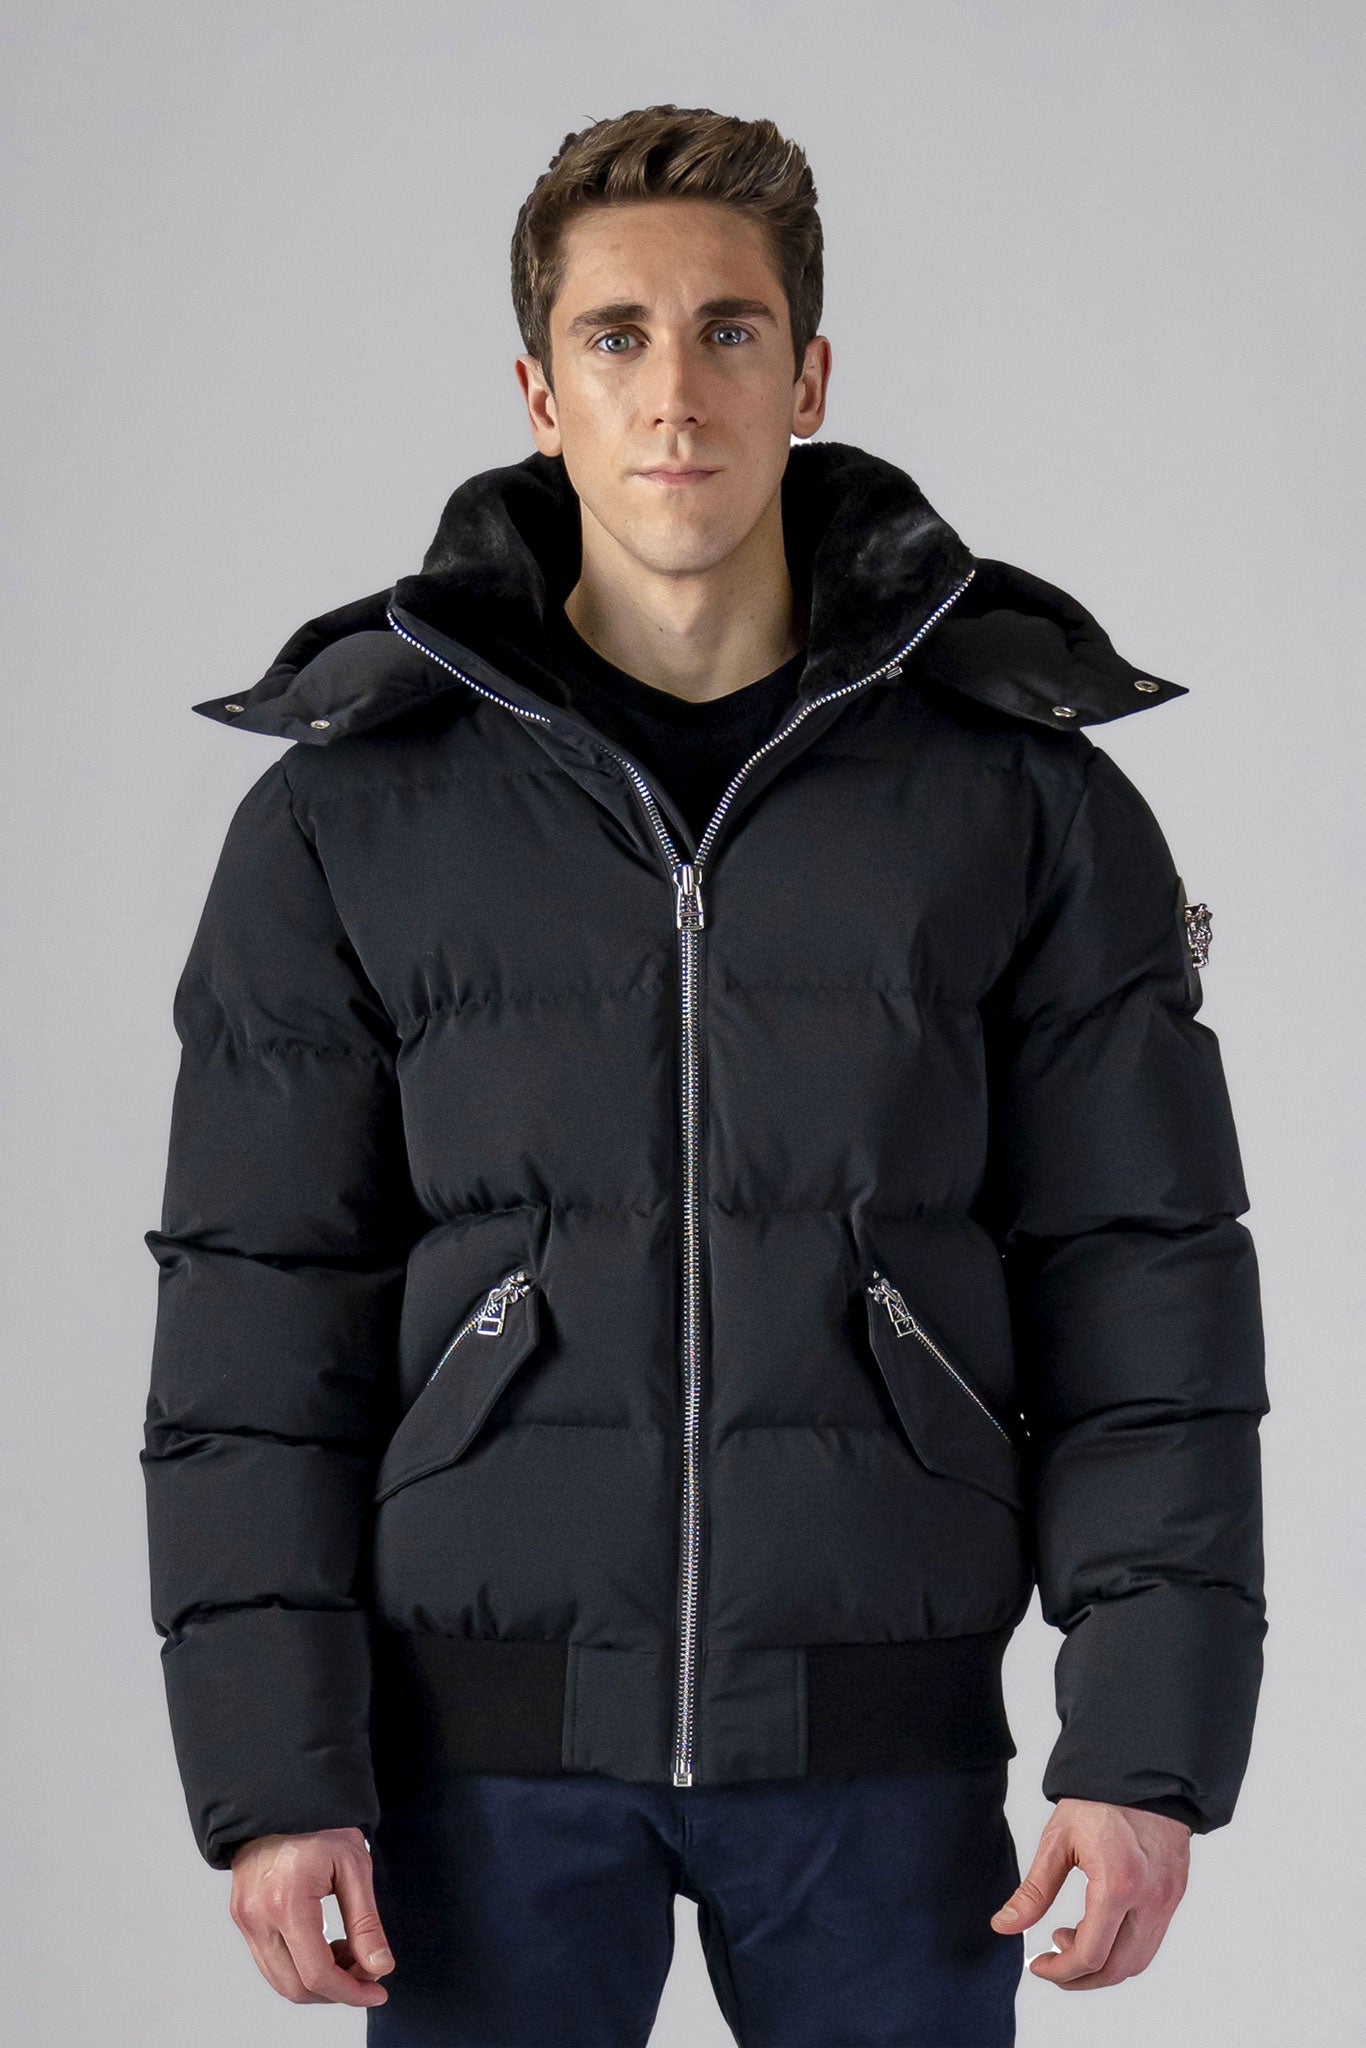 Woodpecker Men's Woody Bomber Winter coat. High-end Canadian designer winter coat for men in “Matte Black